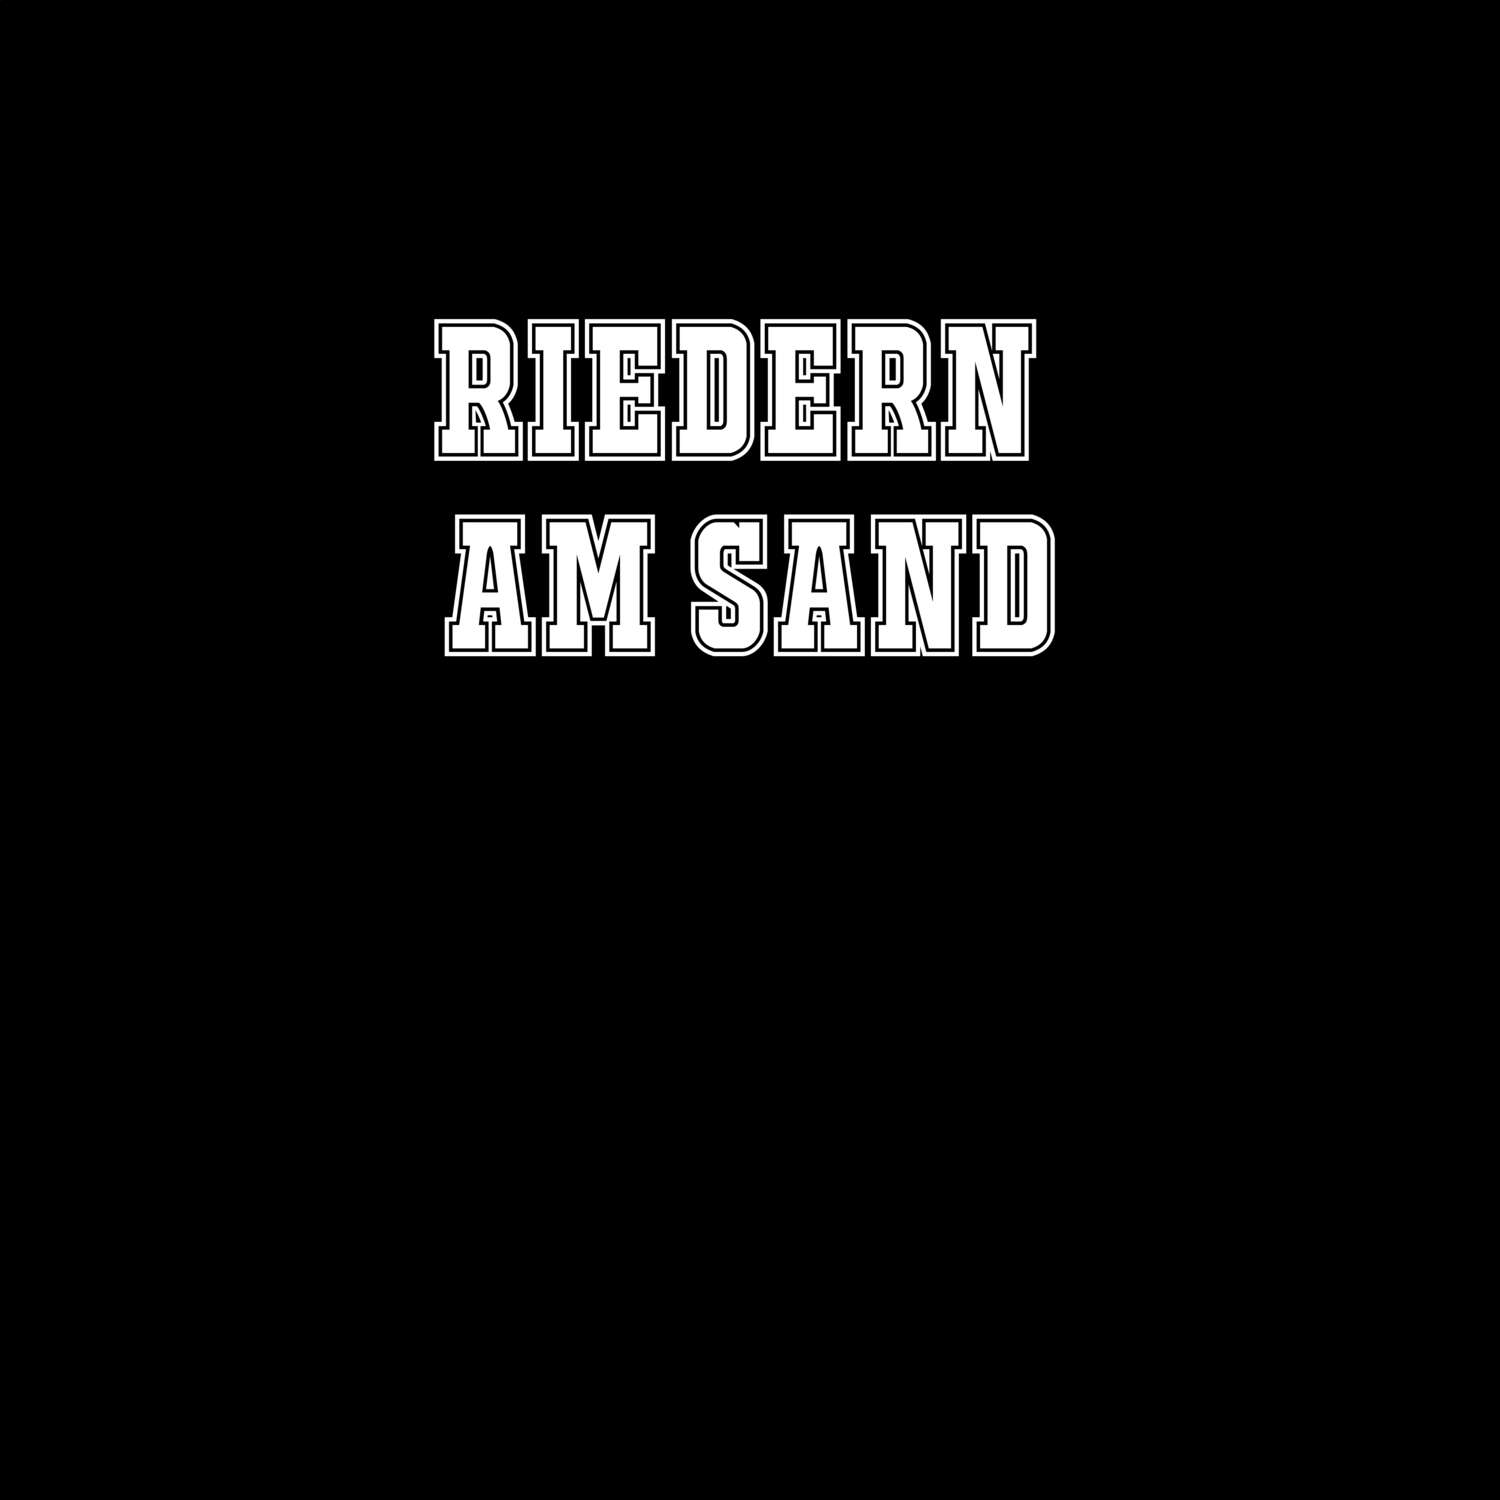 Riedern am Sand T-Shirt »Classic«